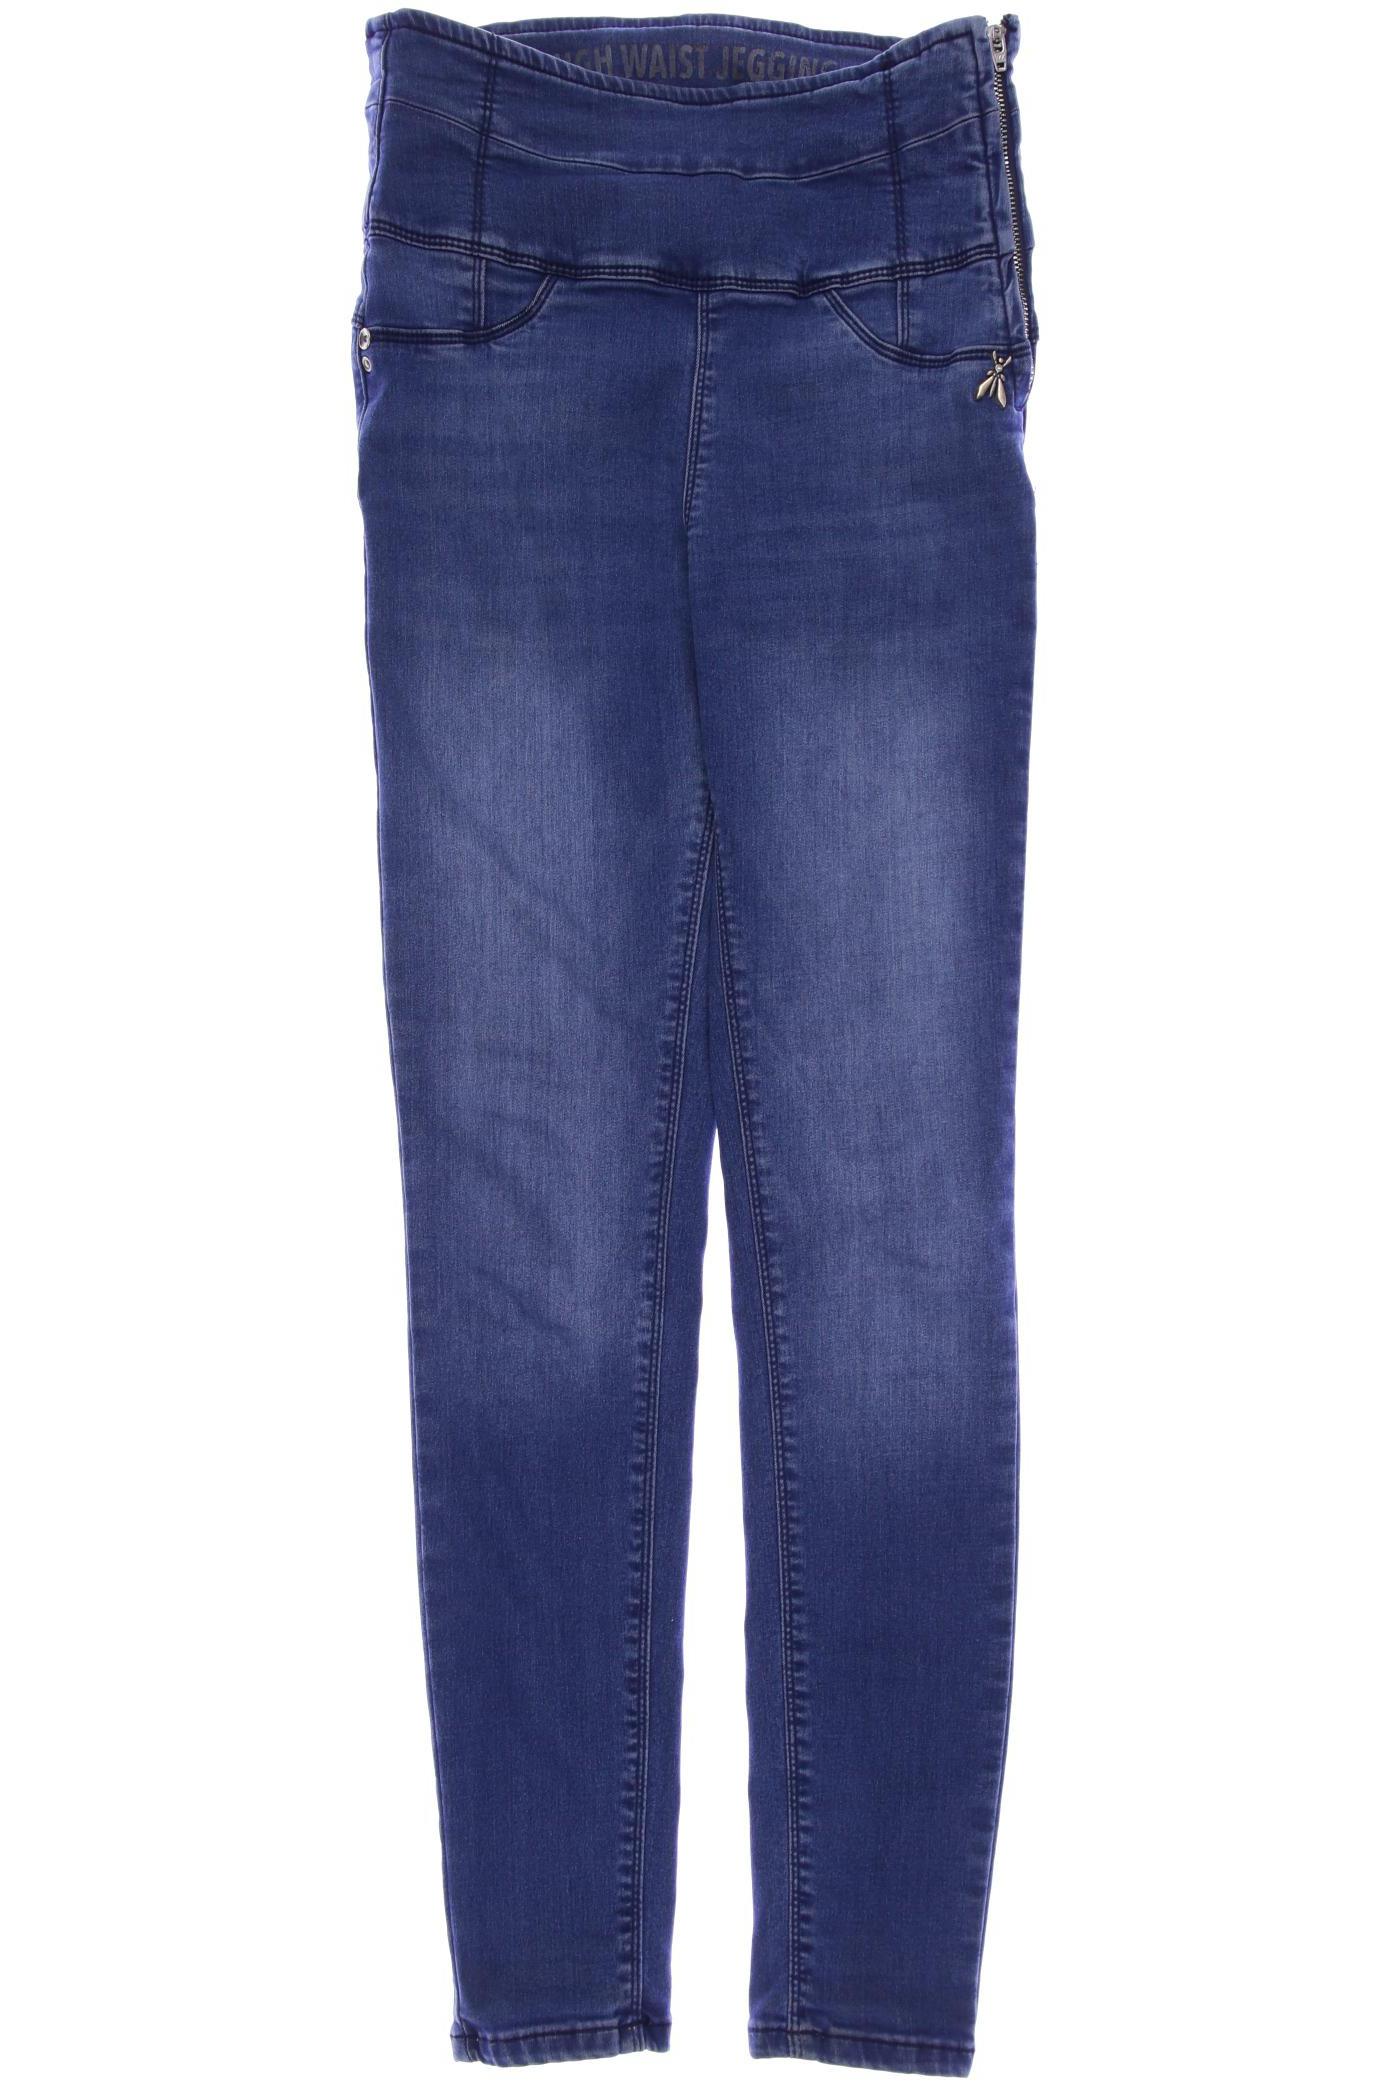 Patrizia Pepe Damen Jeans, blau von PATRIZIA PEPE